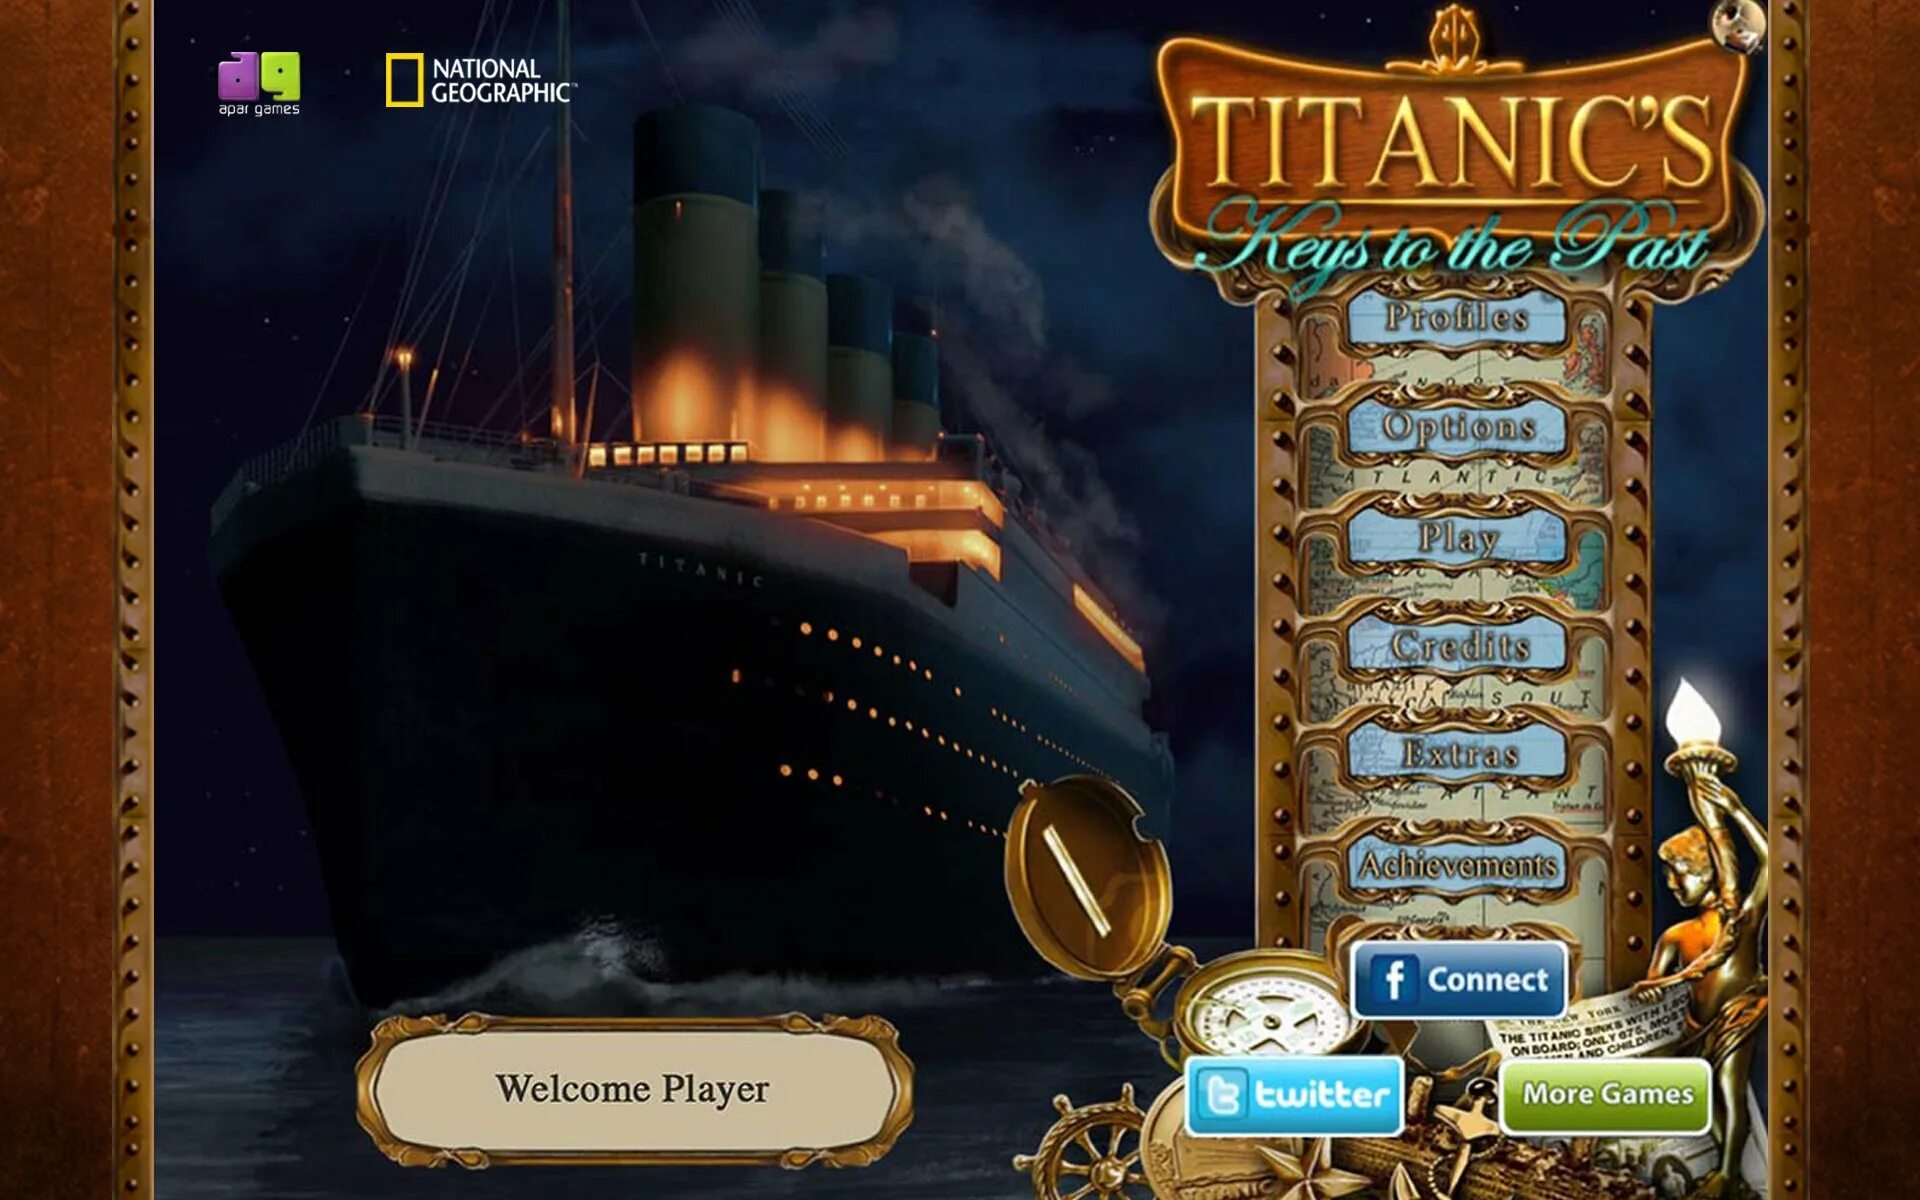 Титаник игра симулятор. Титаник VP игра. Титаник 2 игра. Настольная игра Титаник.